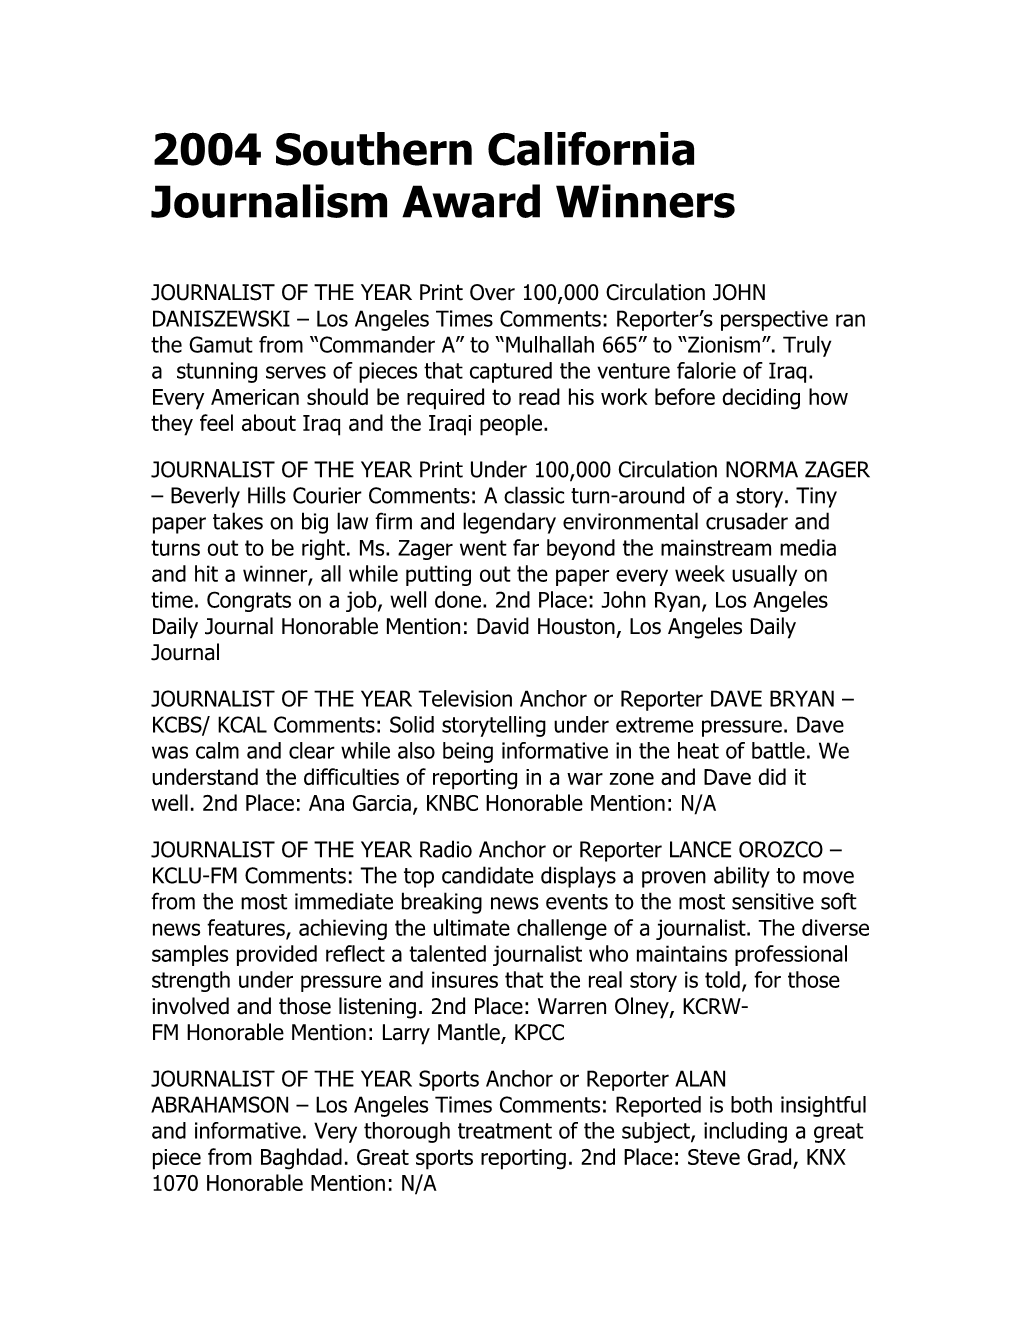 2004 Southern California Journalism Award Winners